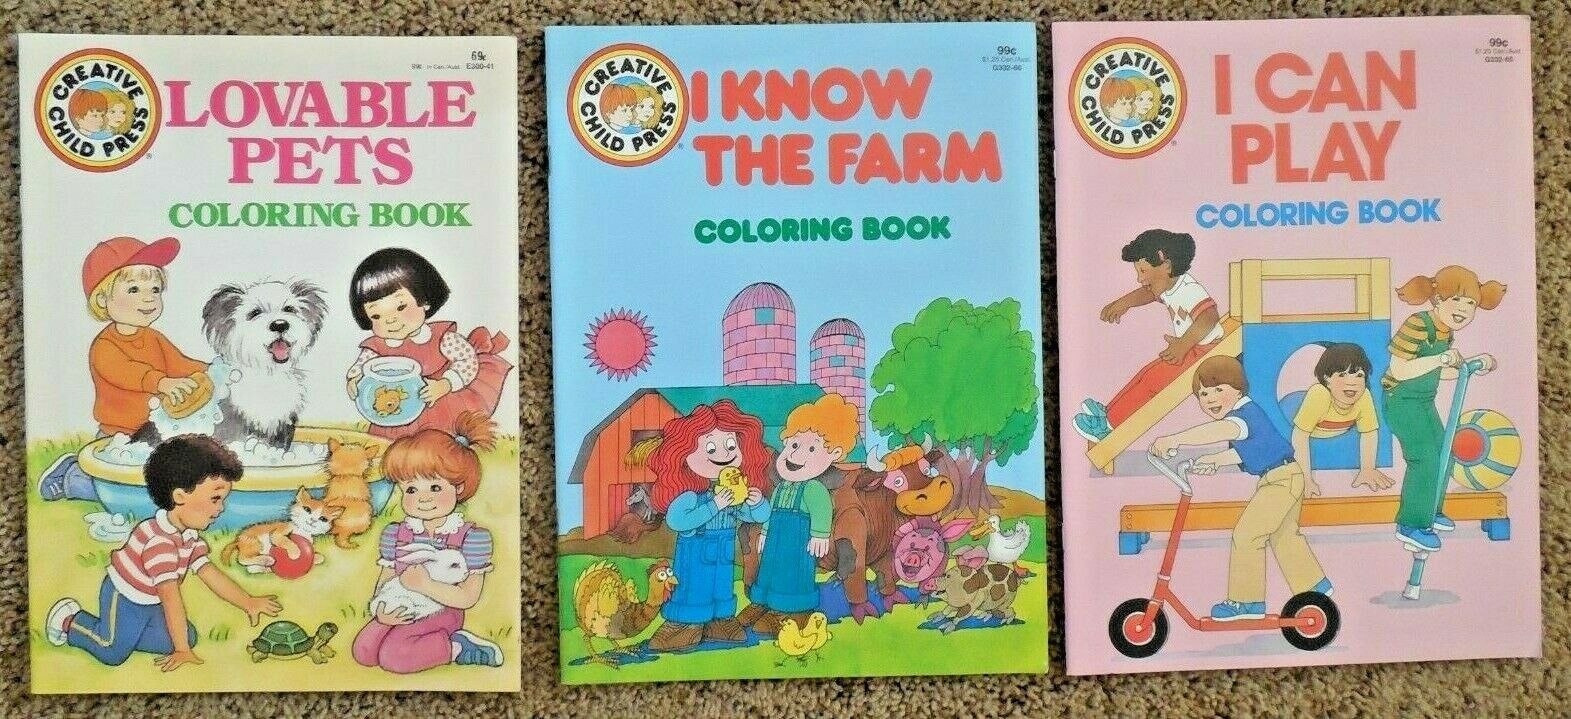 III. How Coloring Books Stimulate Imagination in Children